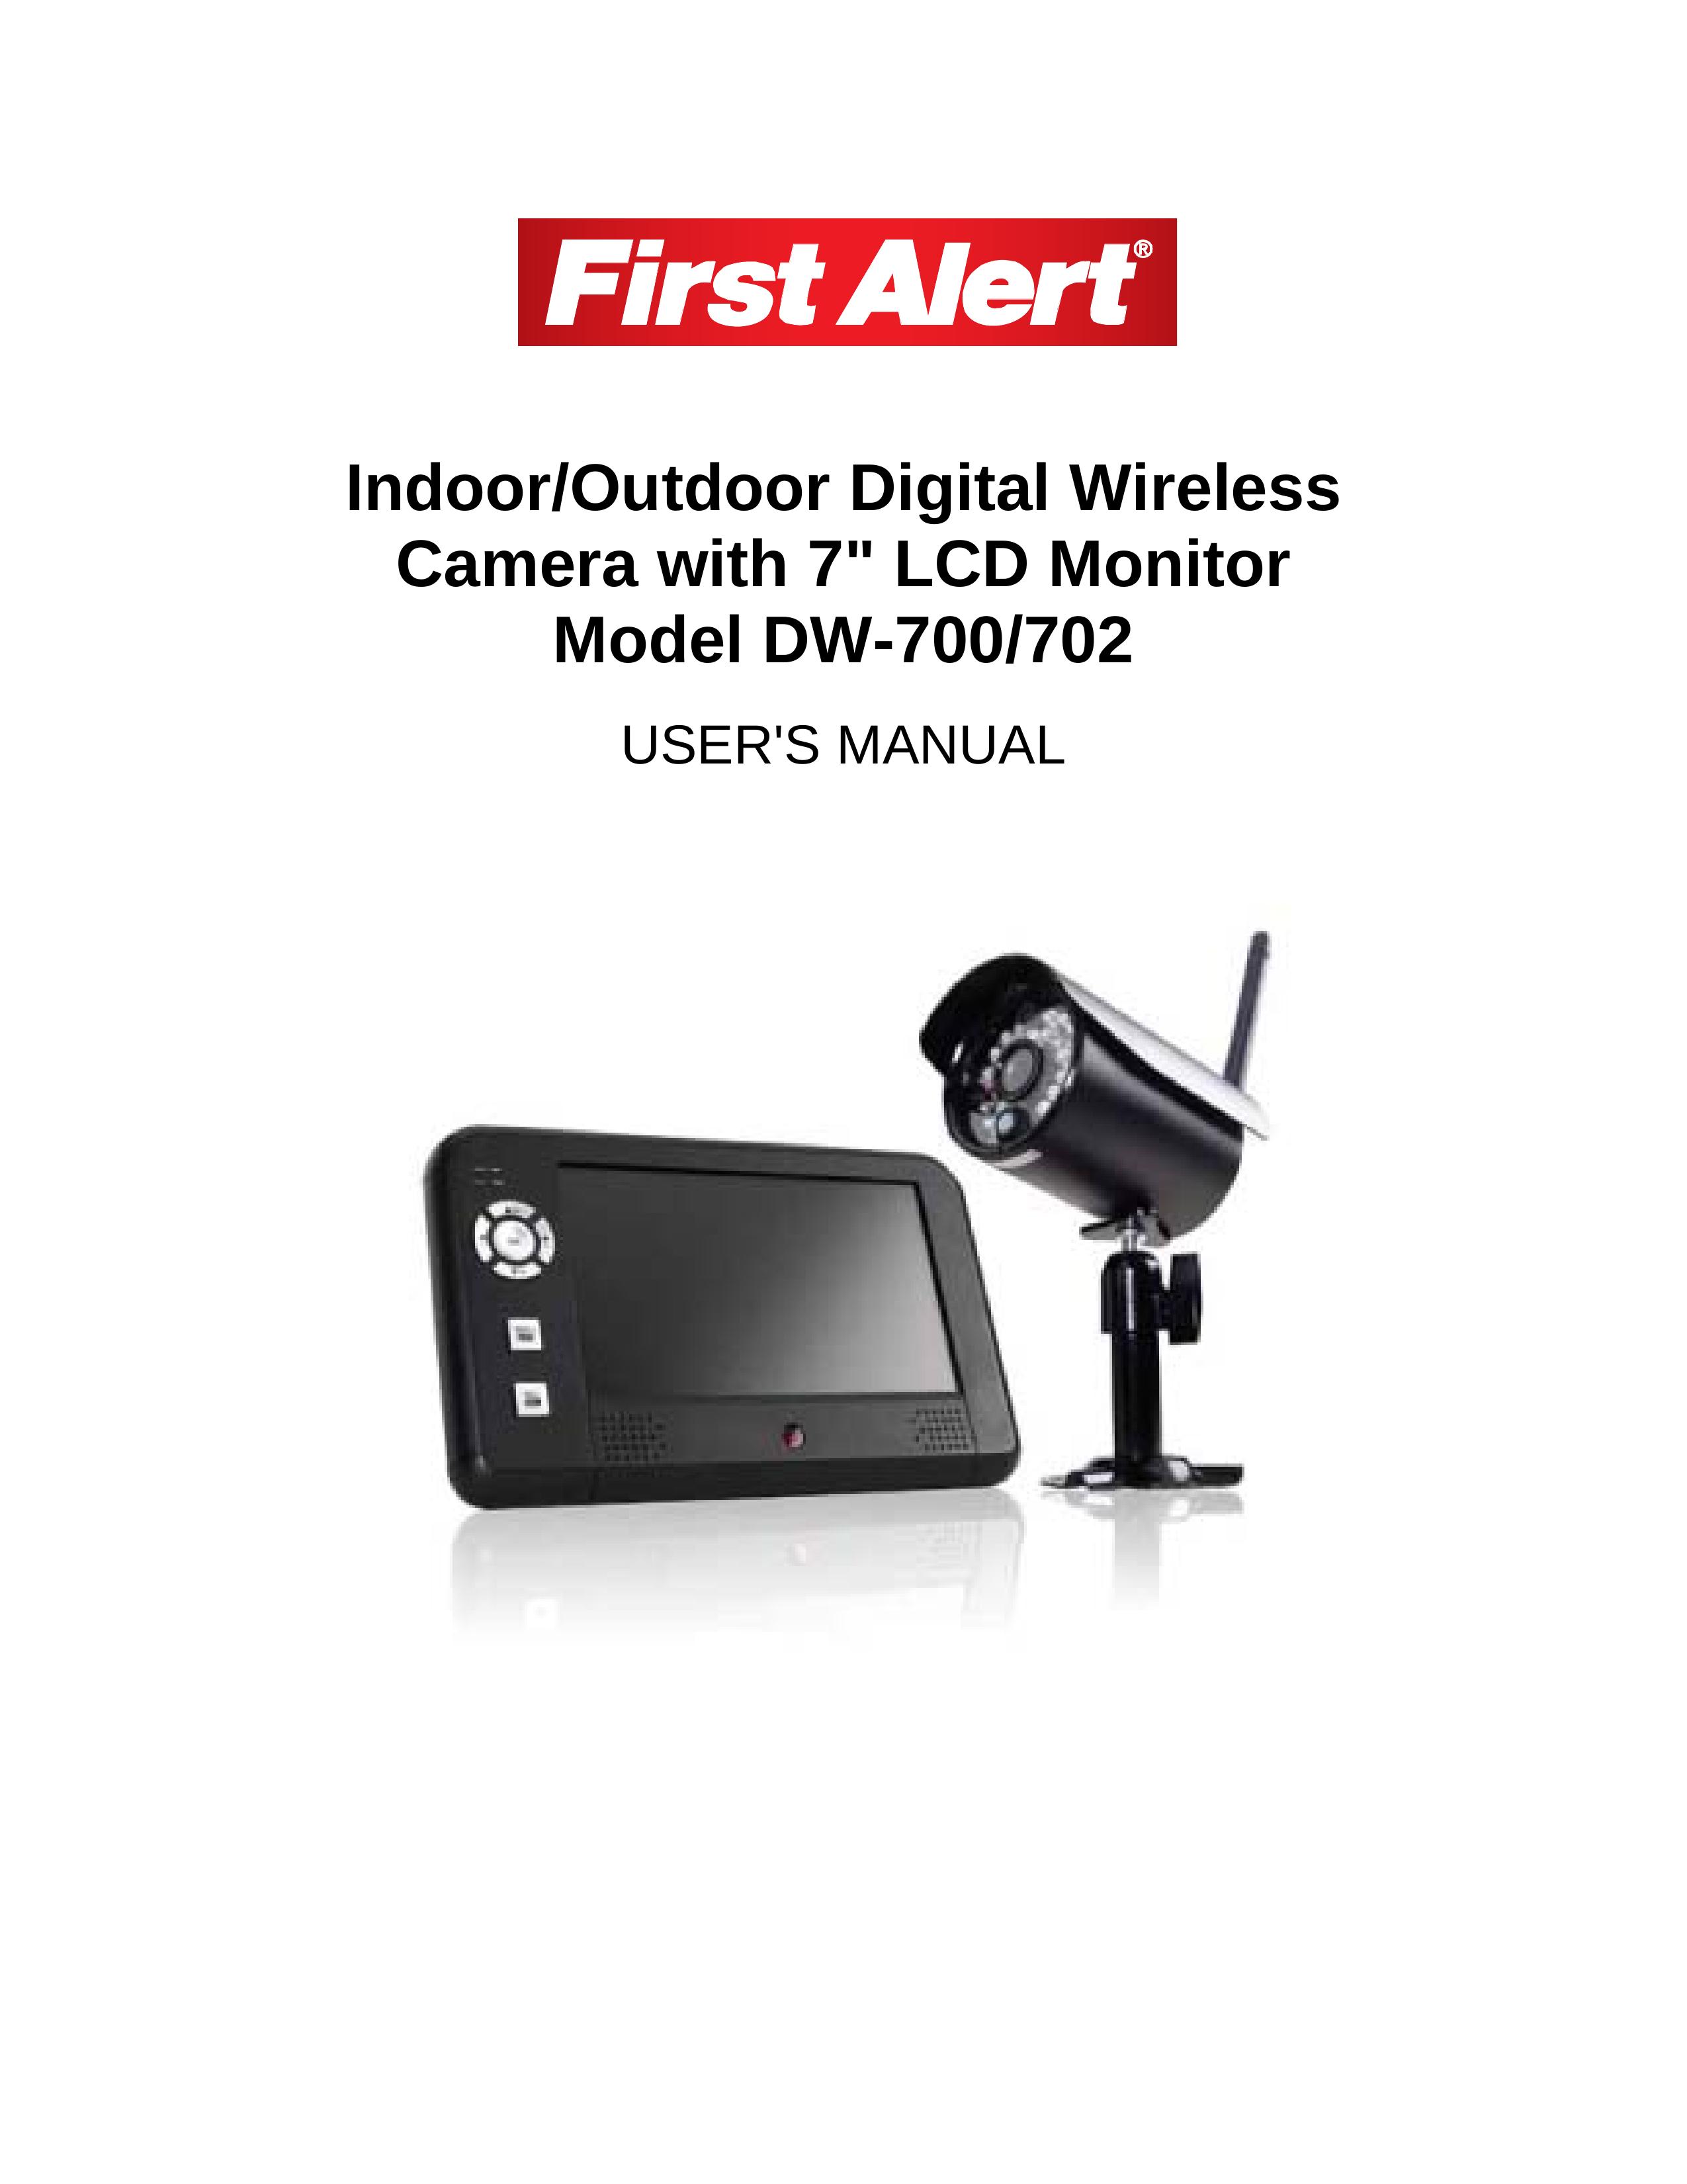 First Alert DW-702 Digital Camera User Manual